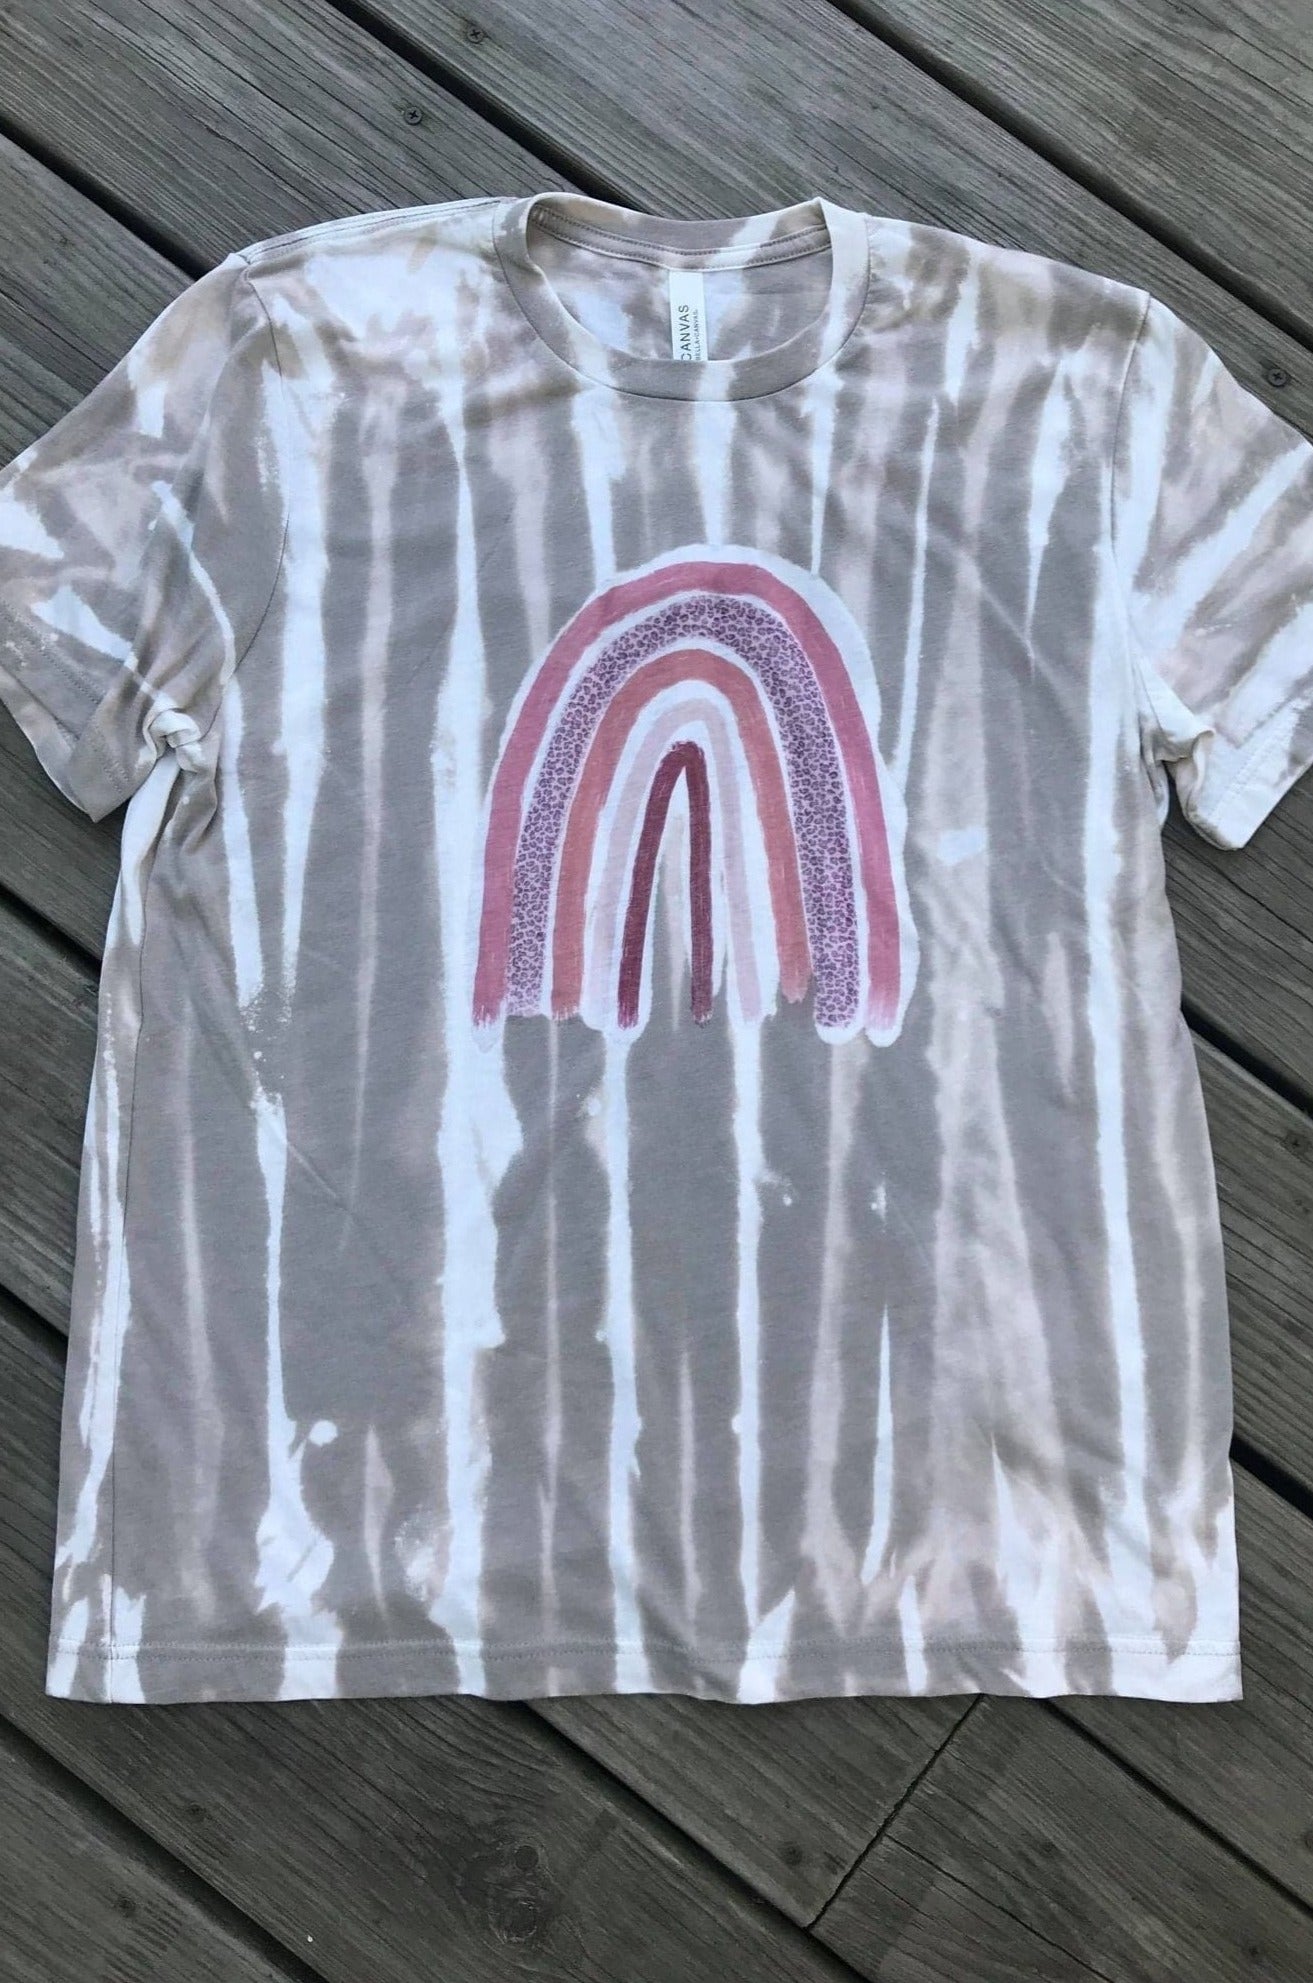 [Rainbow Tie Dye] ONLY MEDIUM LEFT Hand Bleach Tee Shirt